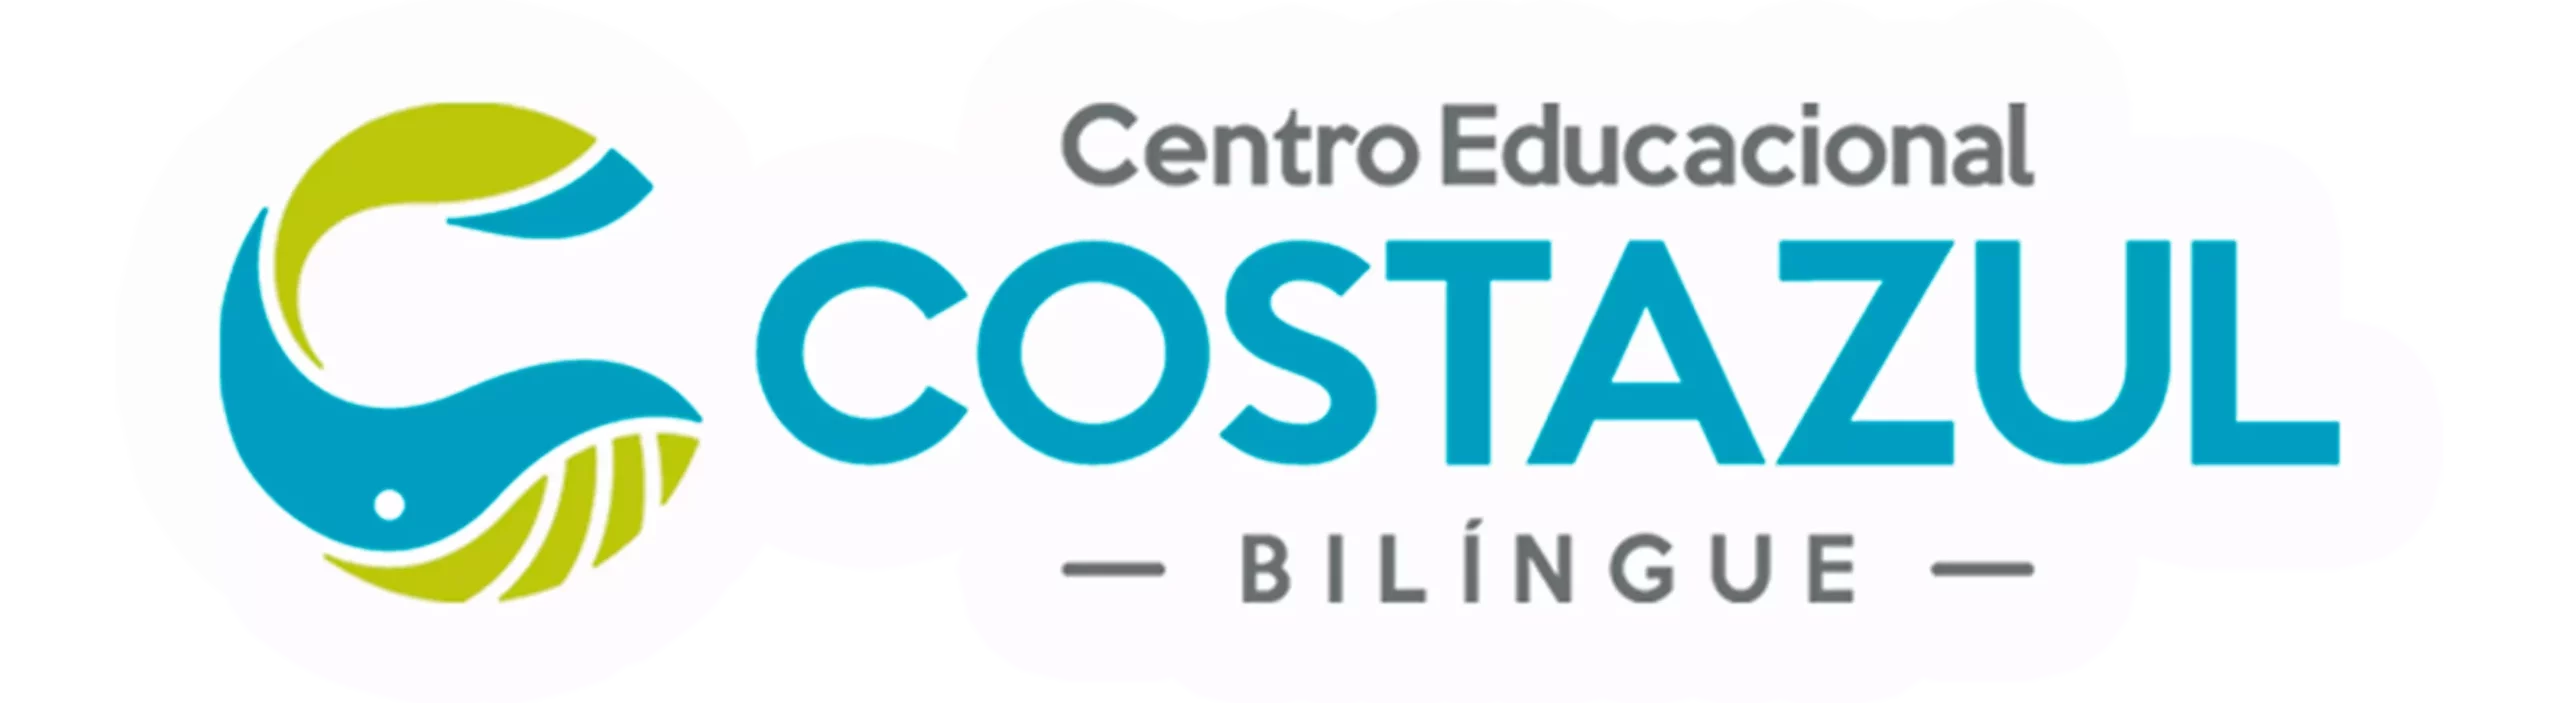 Centro Educacional Costazul